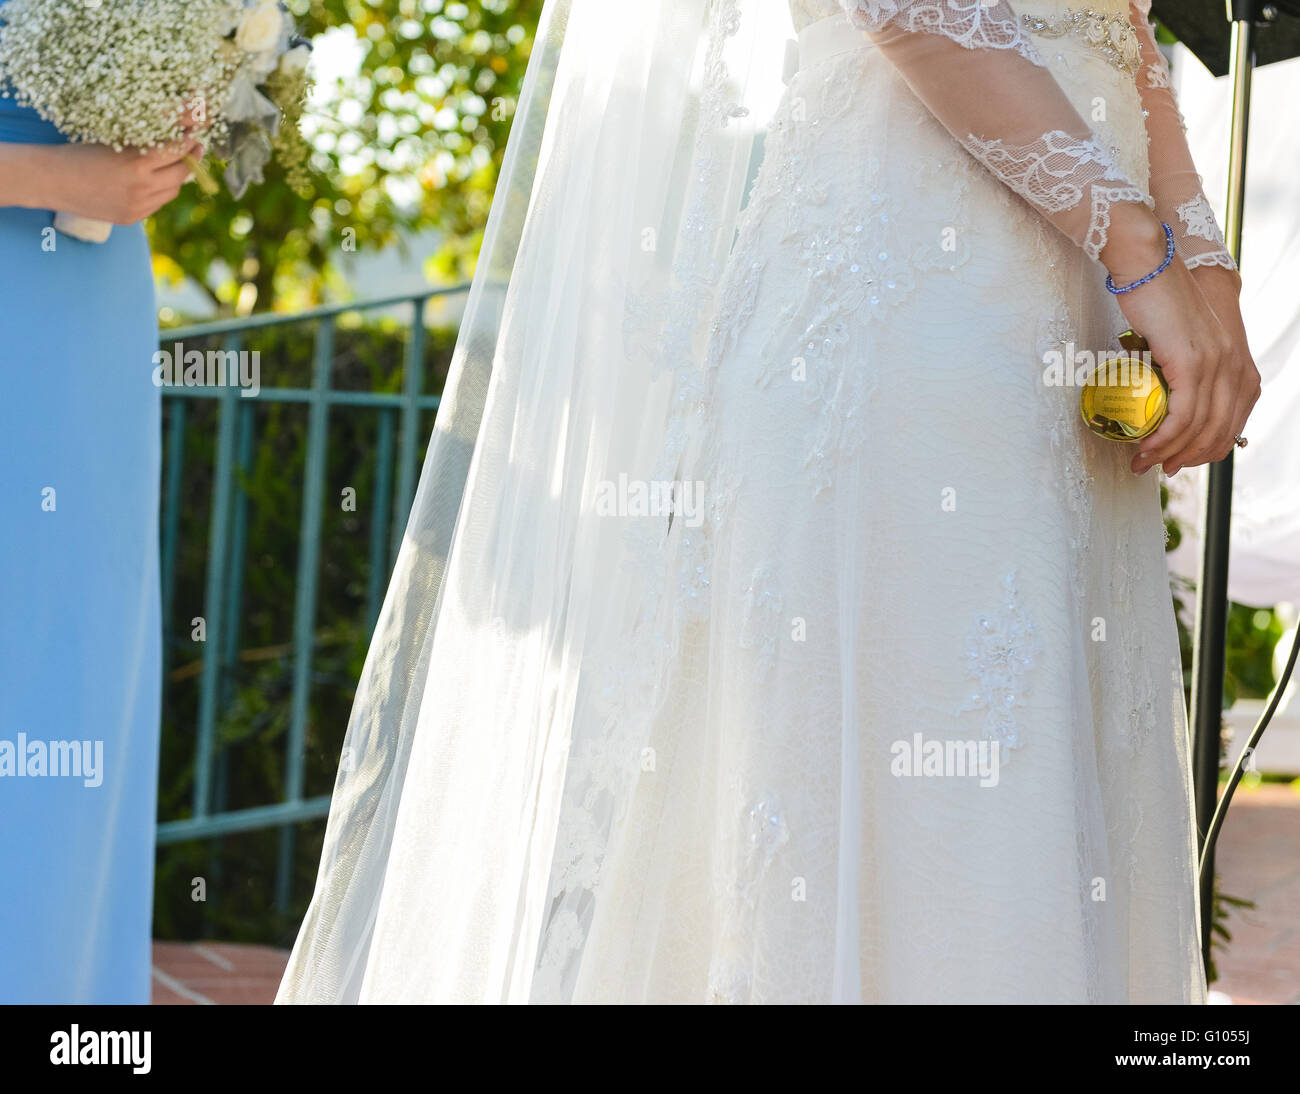 Wedding Photography - Bride Holding Vows Stock Photo